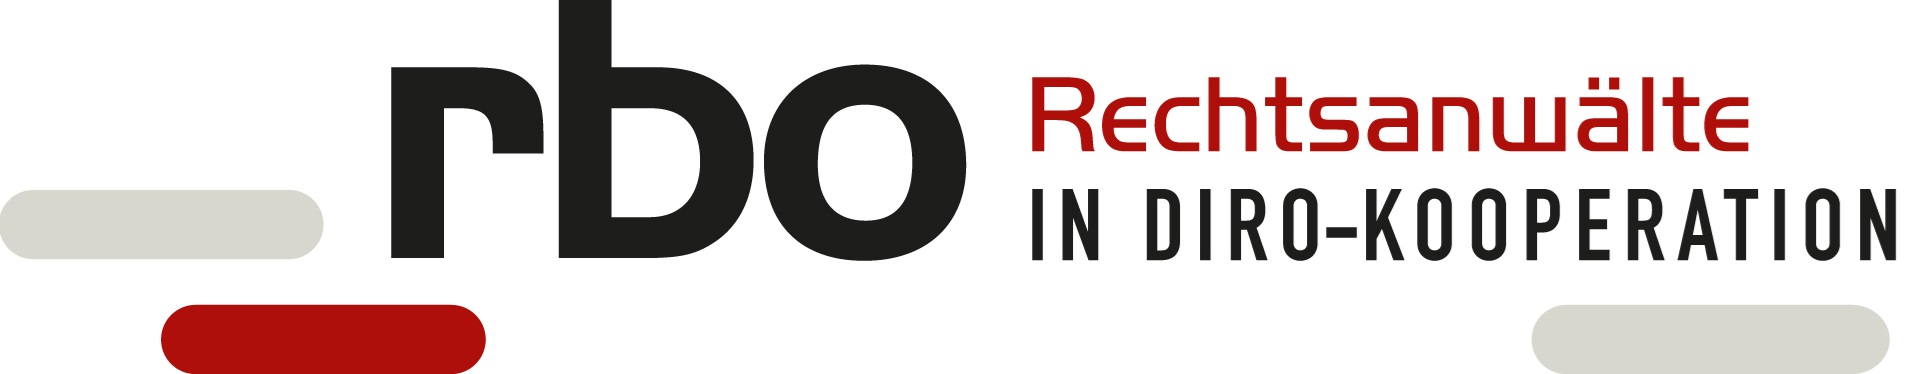 Logo rbo - Rechtsanwälte